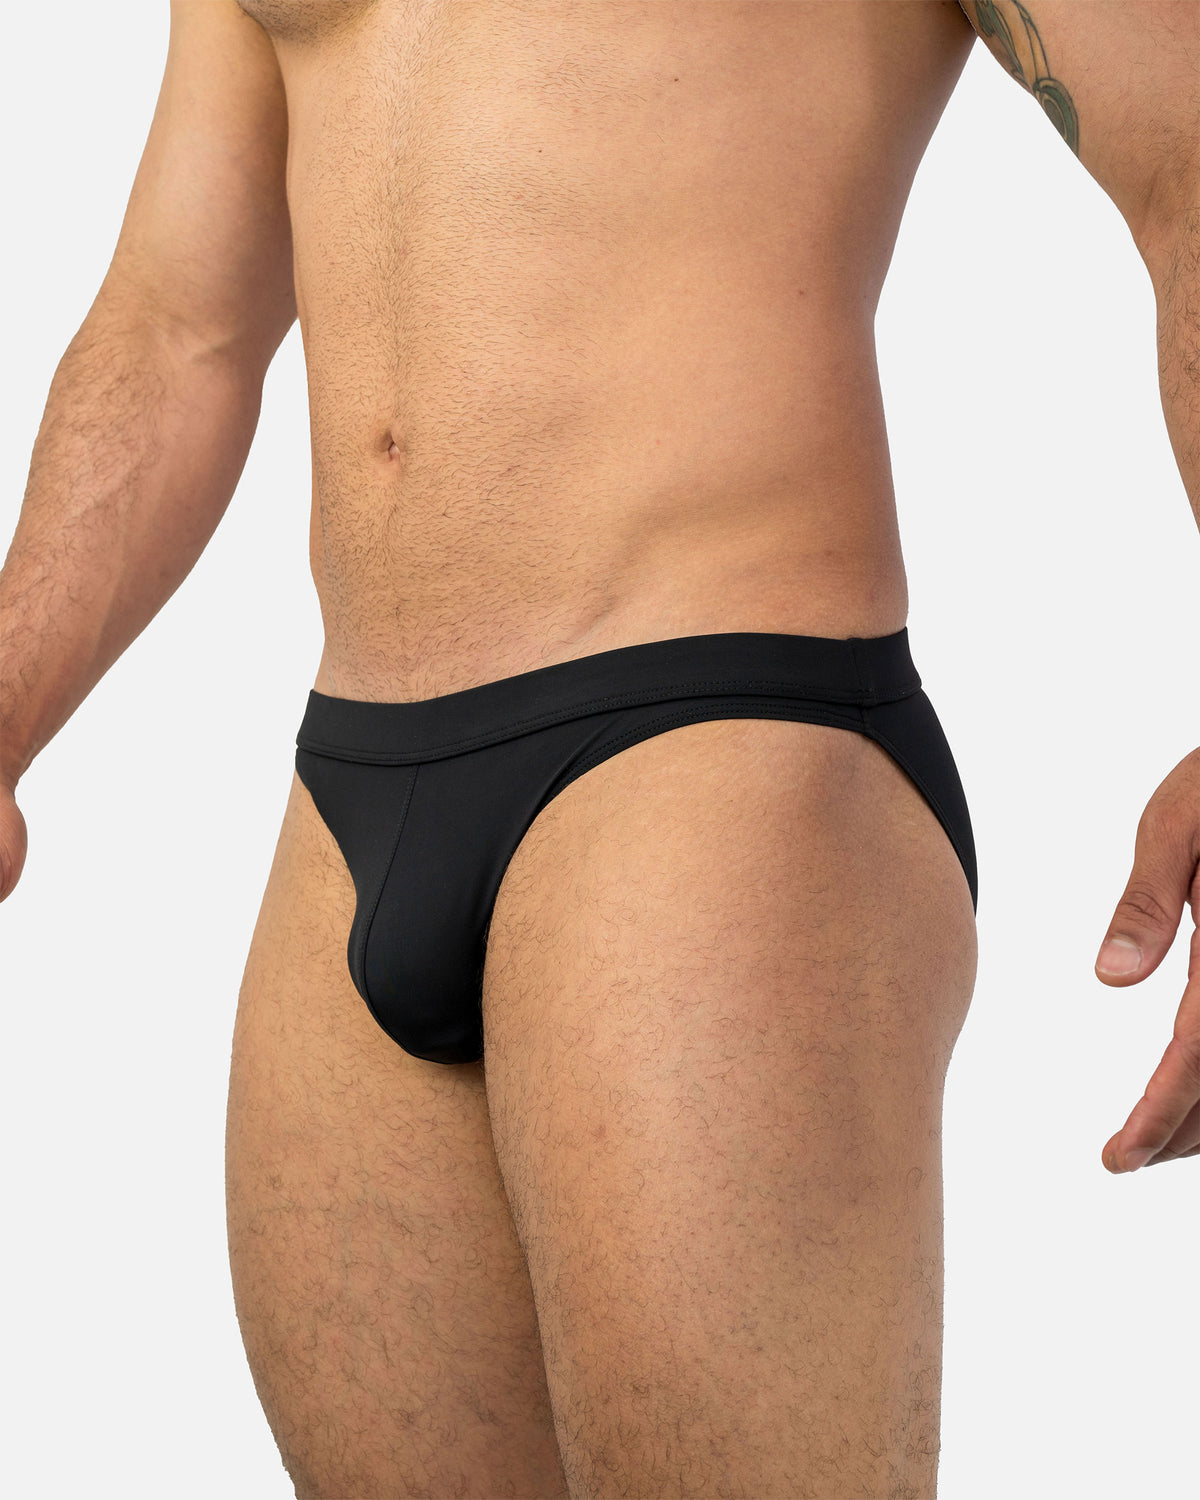 Modus Vivendi Mens underwear Sexy Jockstrap and Brief try on 